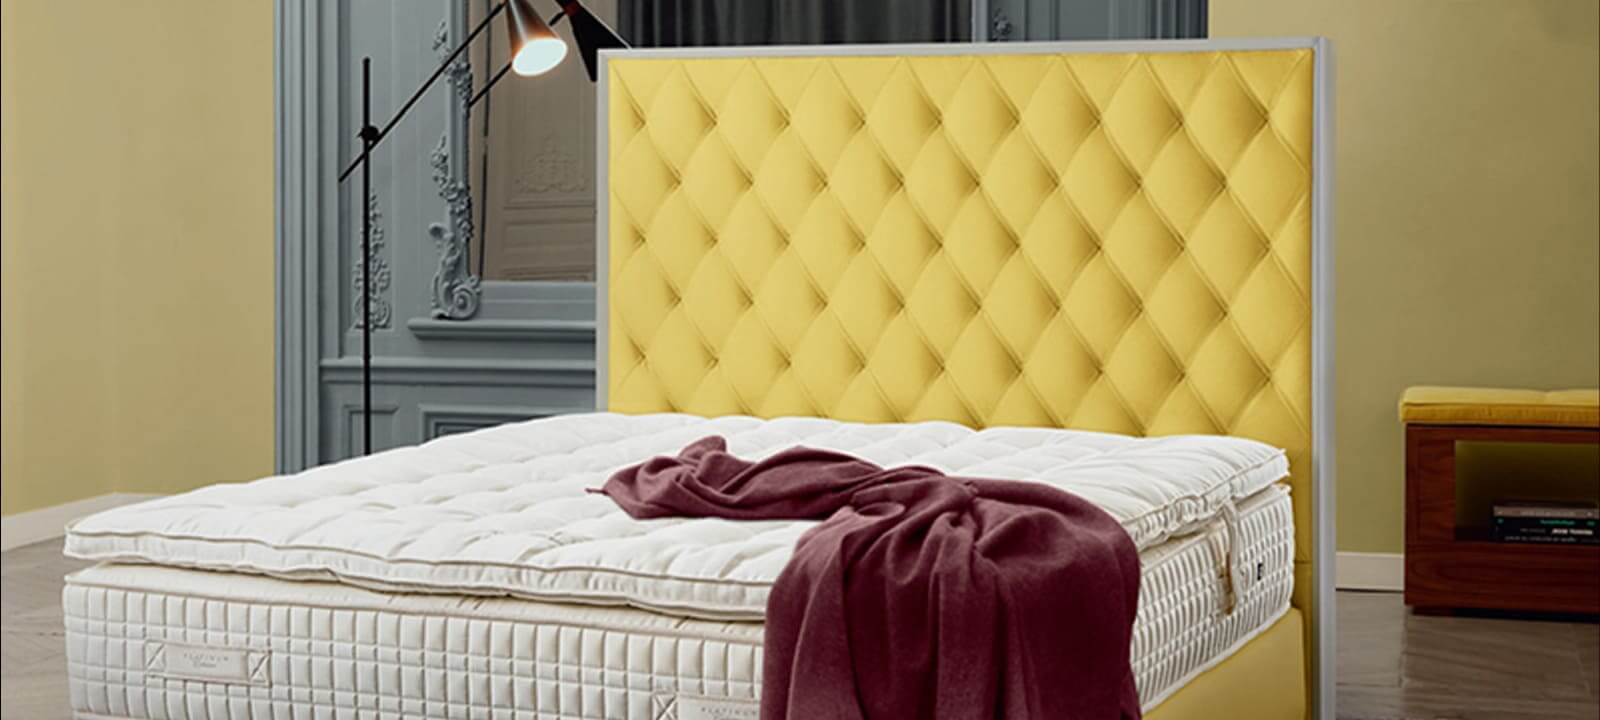 TRECA 法國寢具品牌 床架 現代風格 現代床架 diamant brut